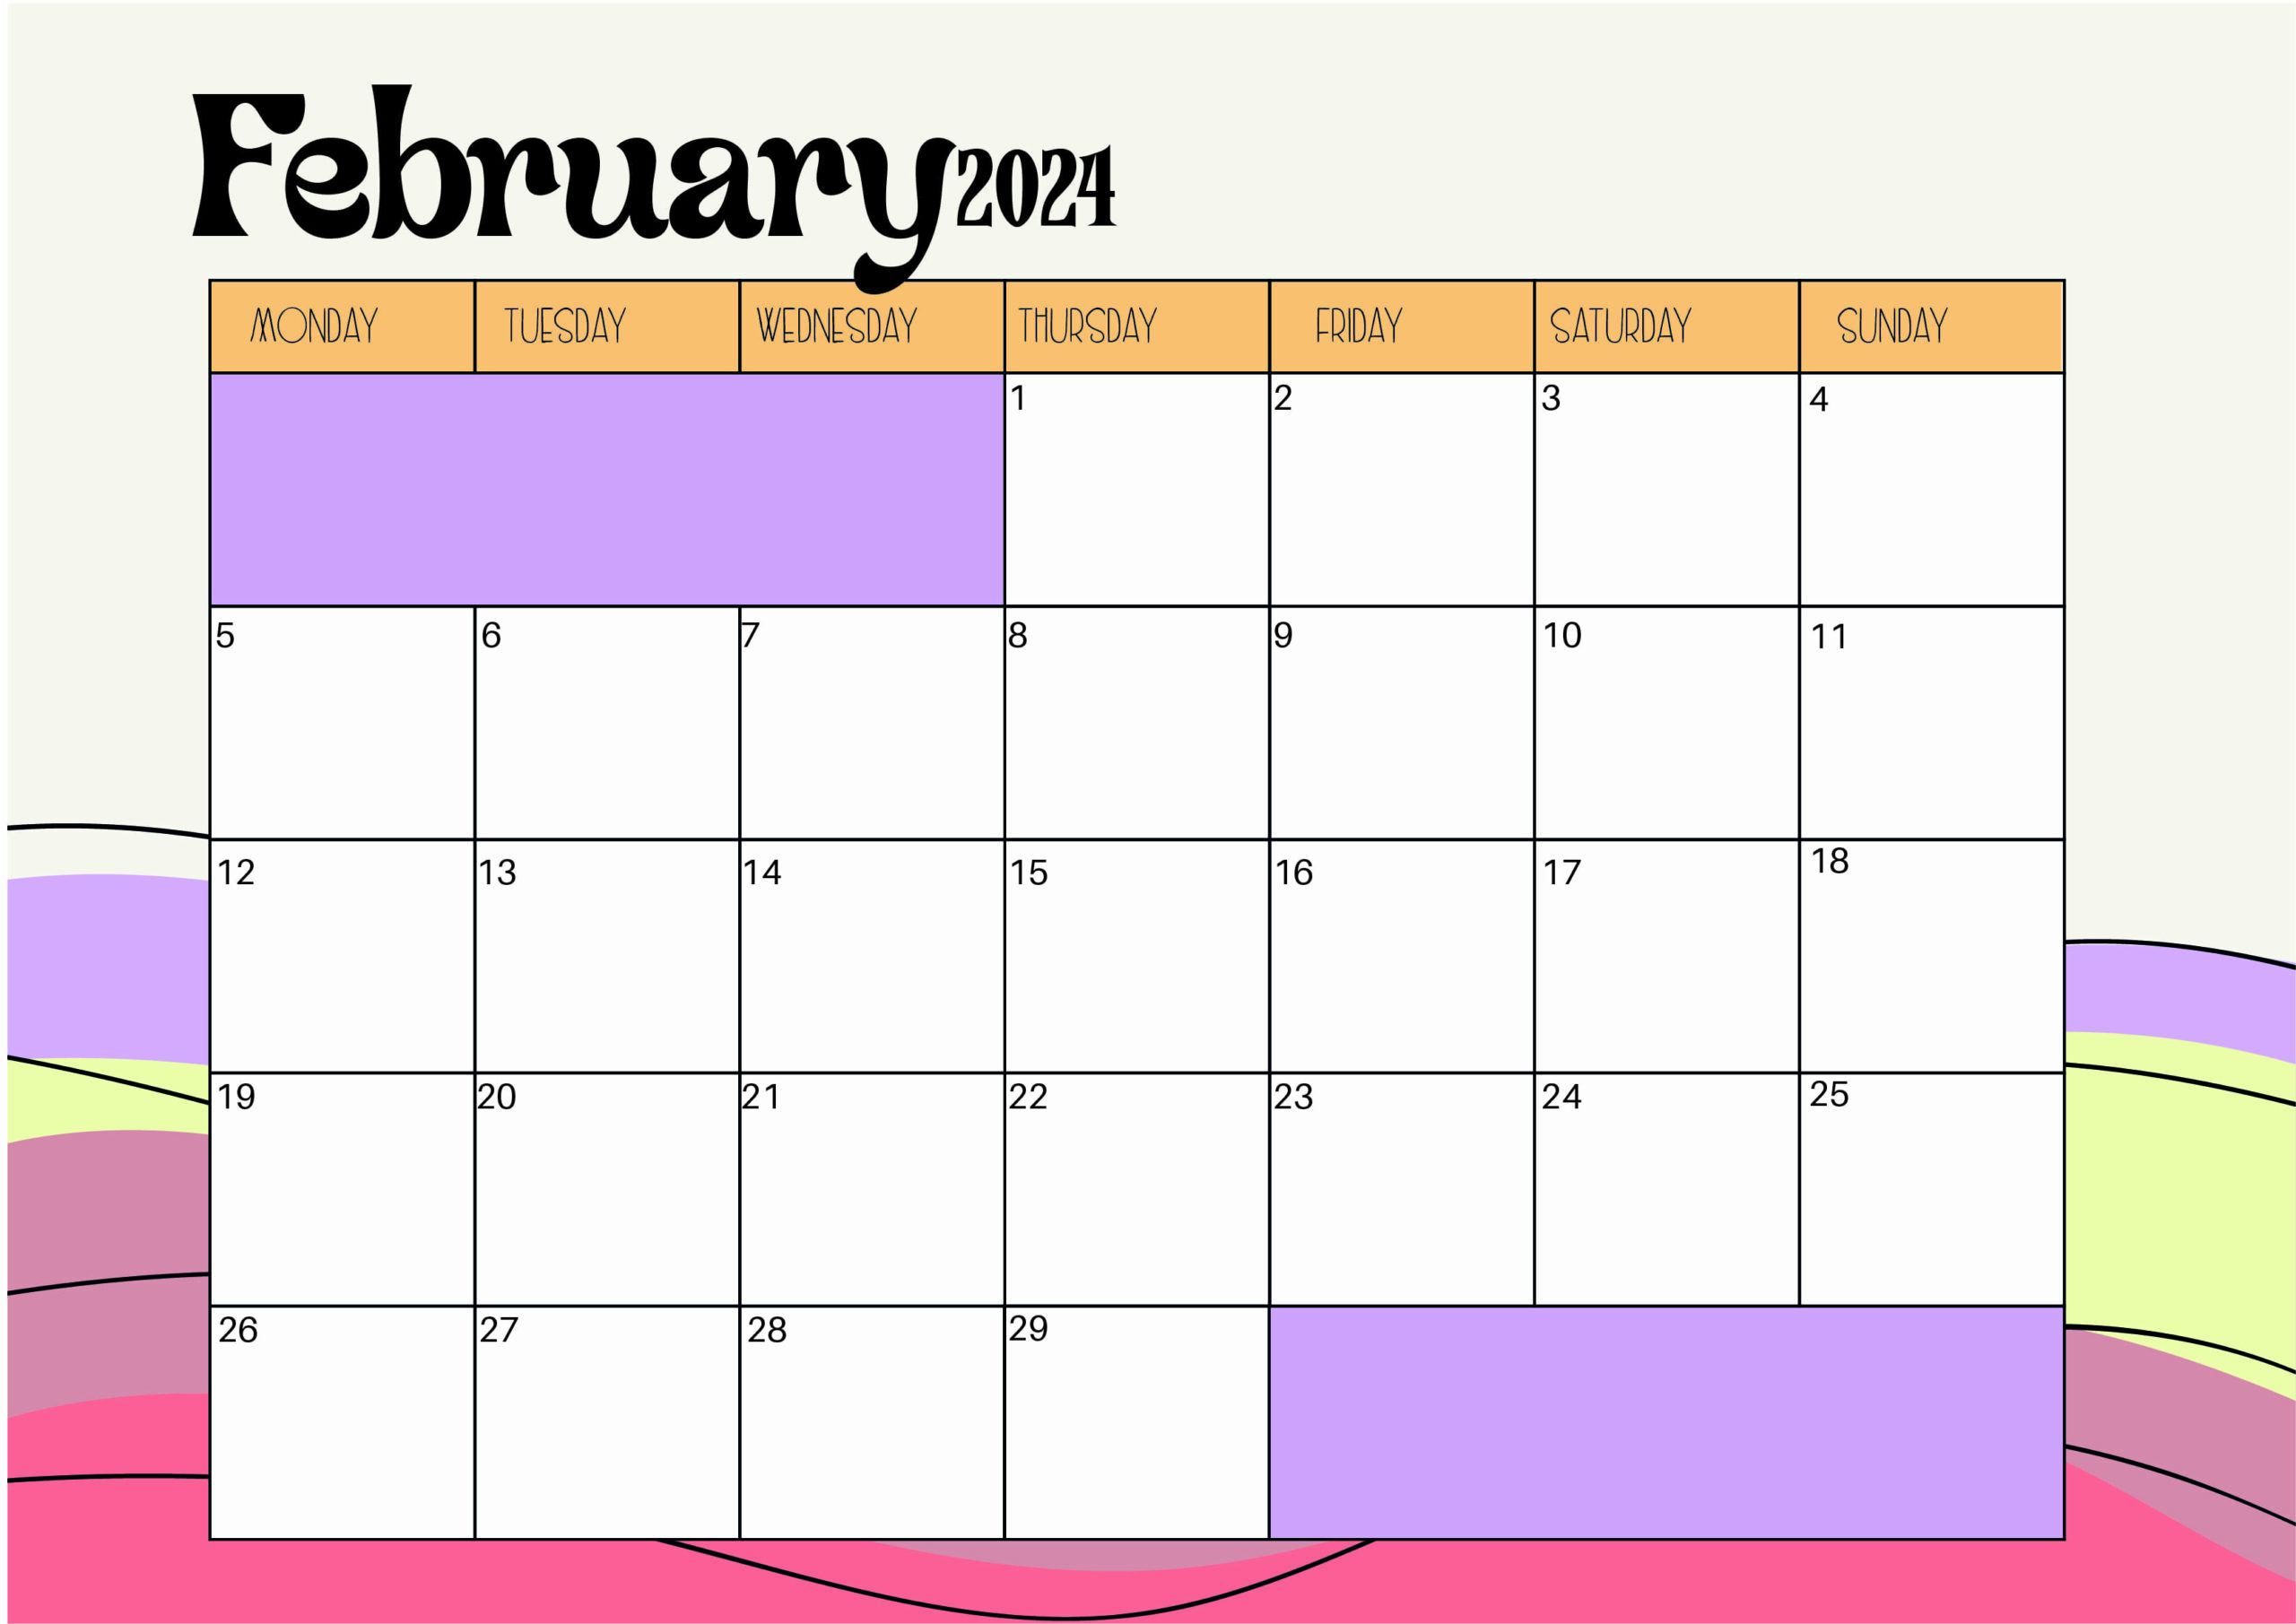 Printable February 2024 Calendar